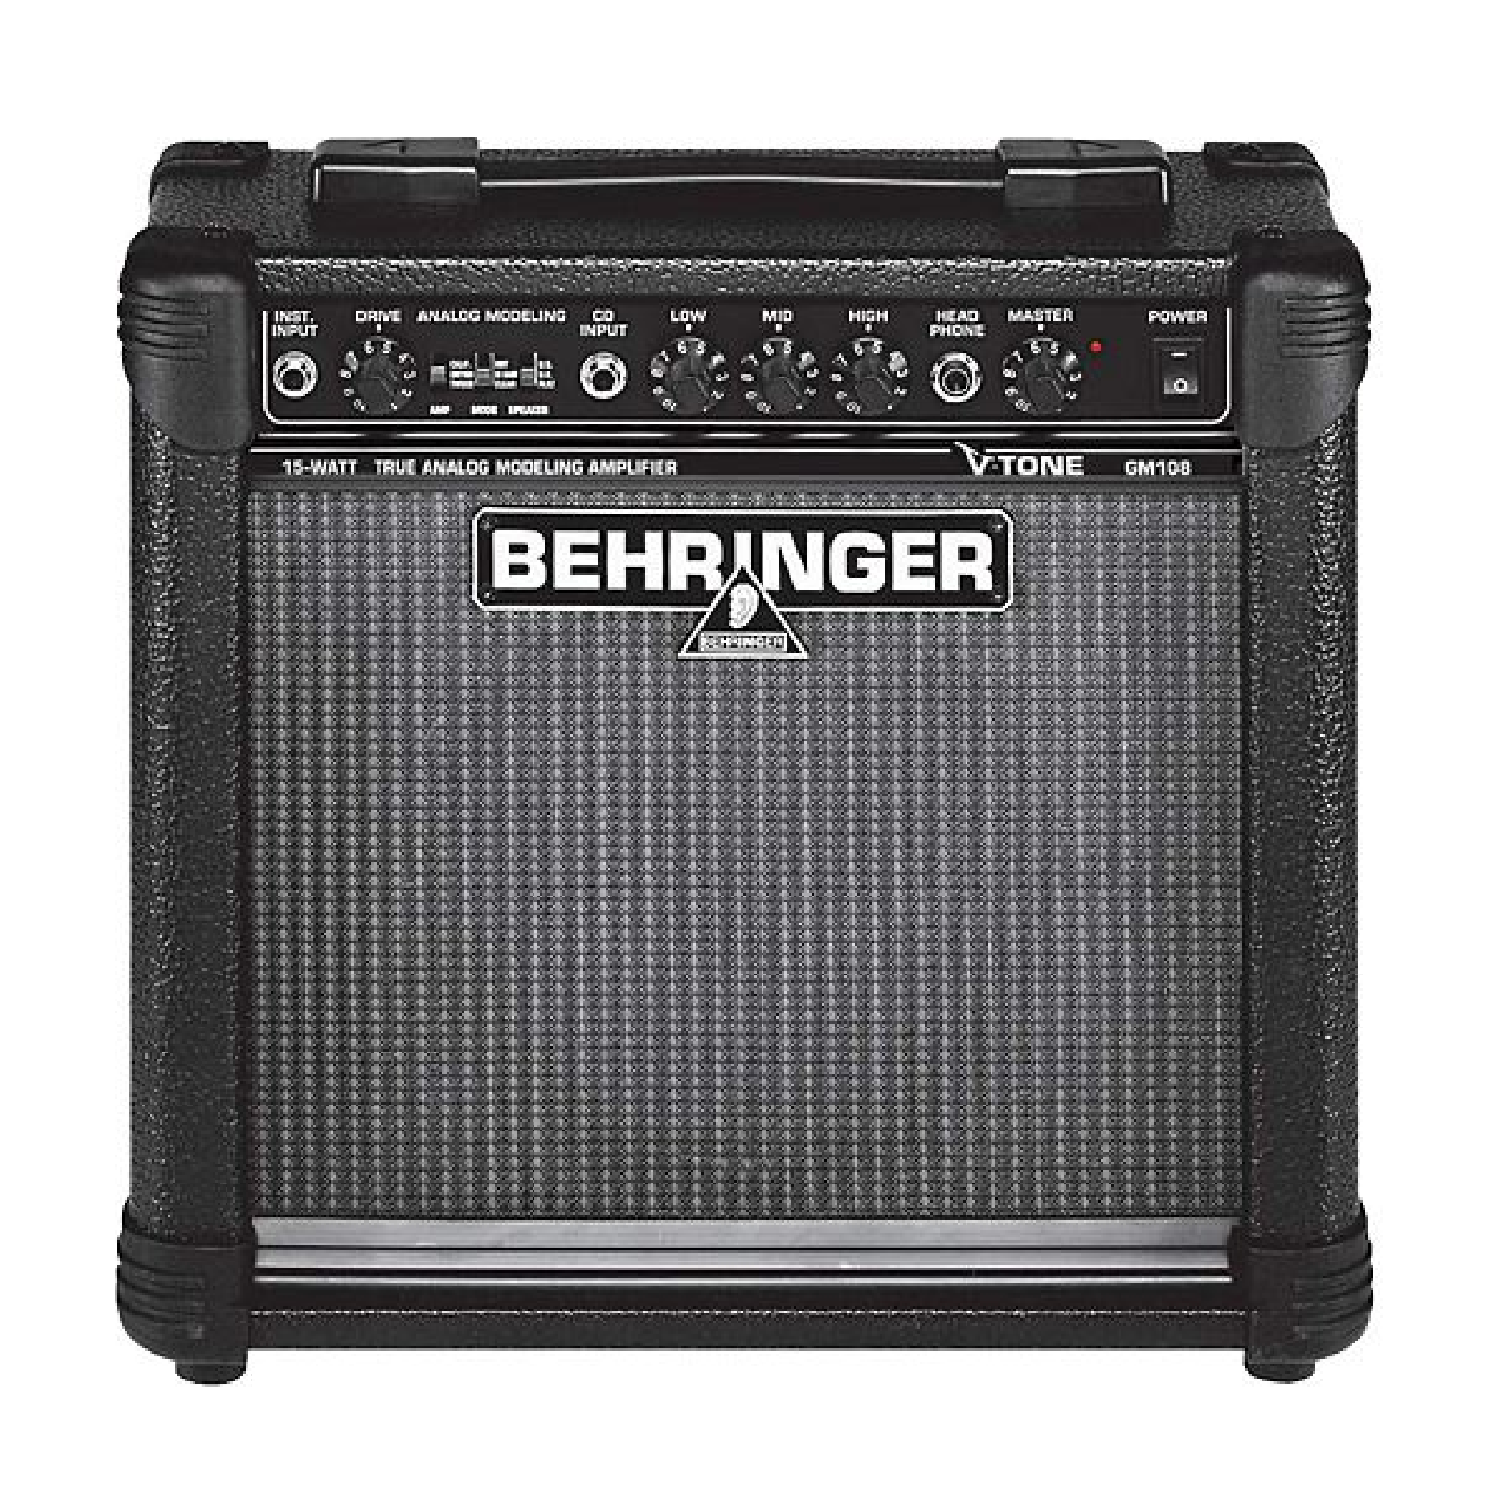 V toned. Комбоусилитель Behringer gm108. Комбоусилитель Behringer gm108 v-Tone. Комбик для электрогитары Behringer v-Tone GM 108. Комбоусилитель Behringer 15w.